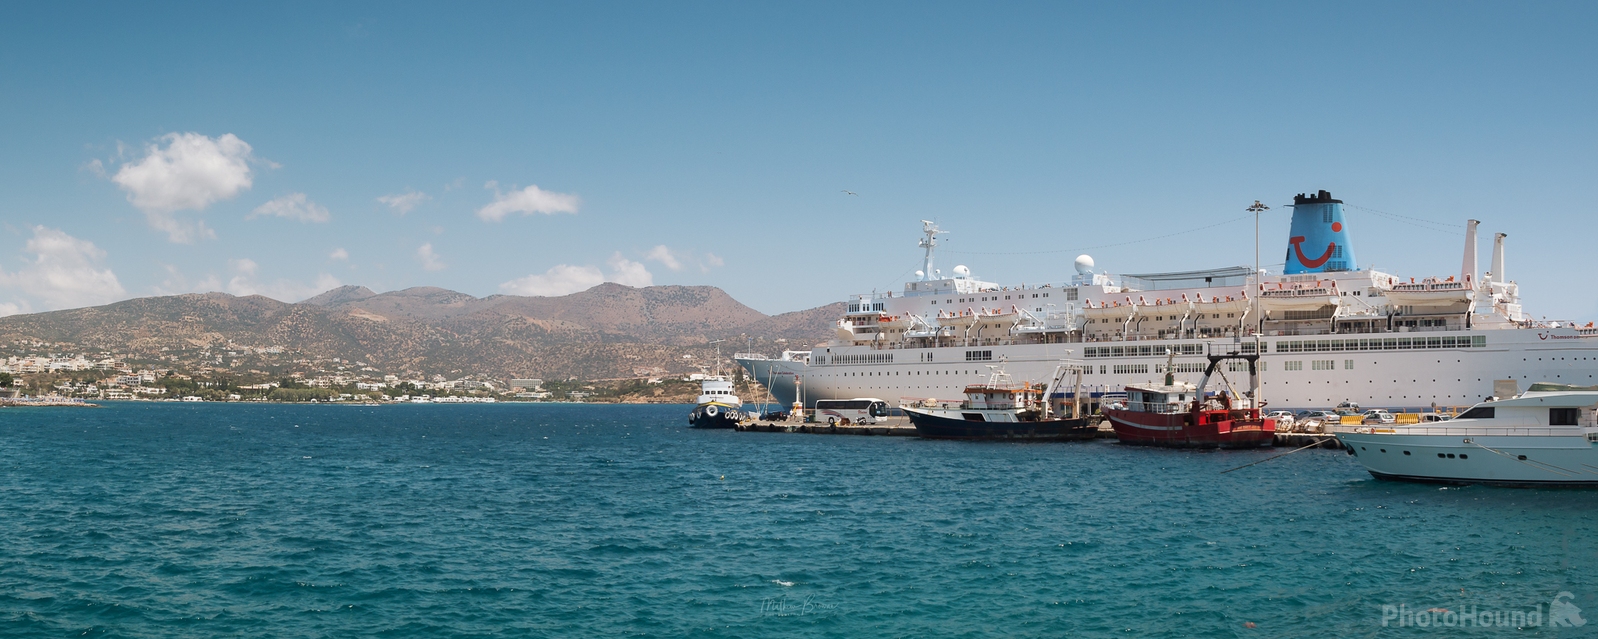 Image of Port of Agios Nikolaos by Mathew Browne